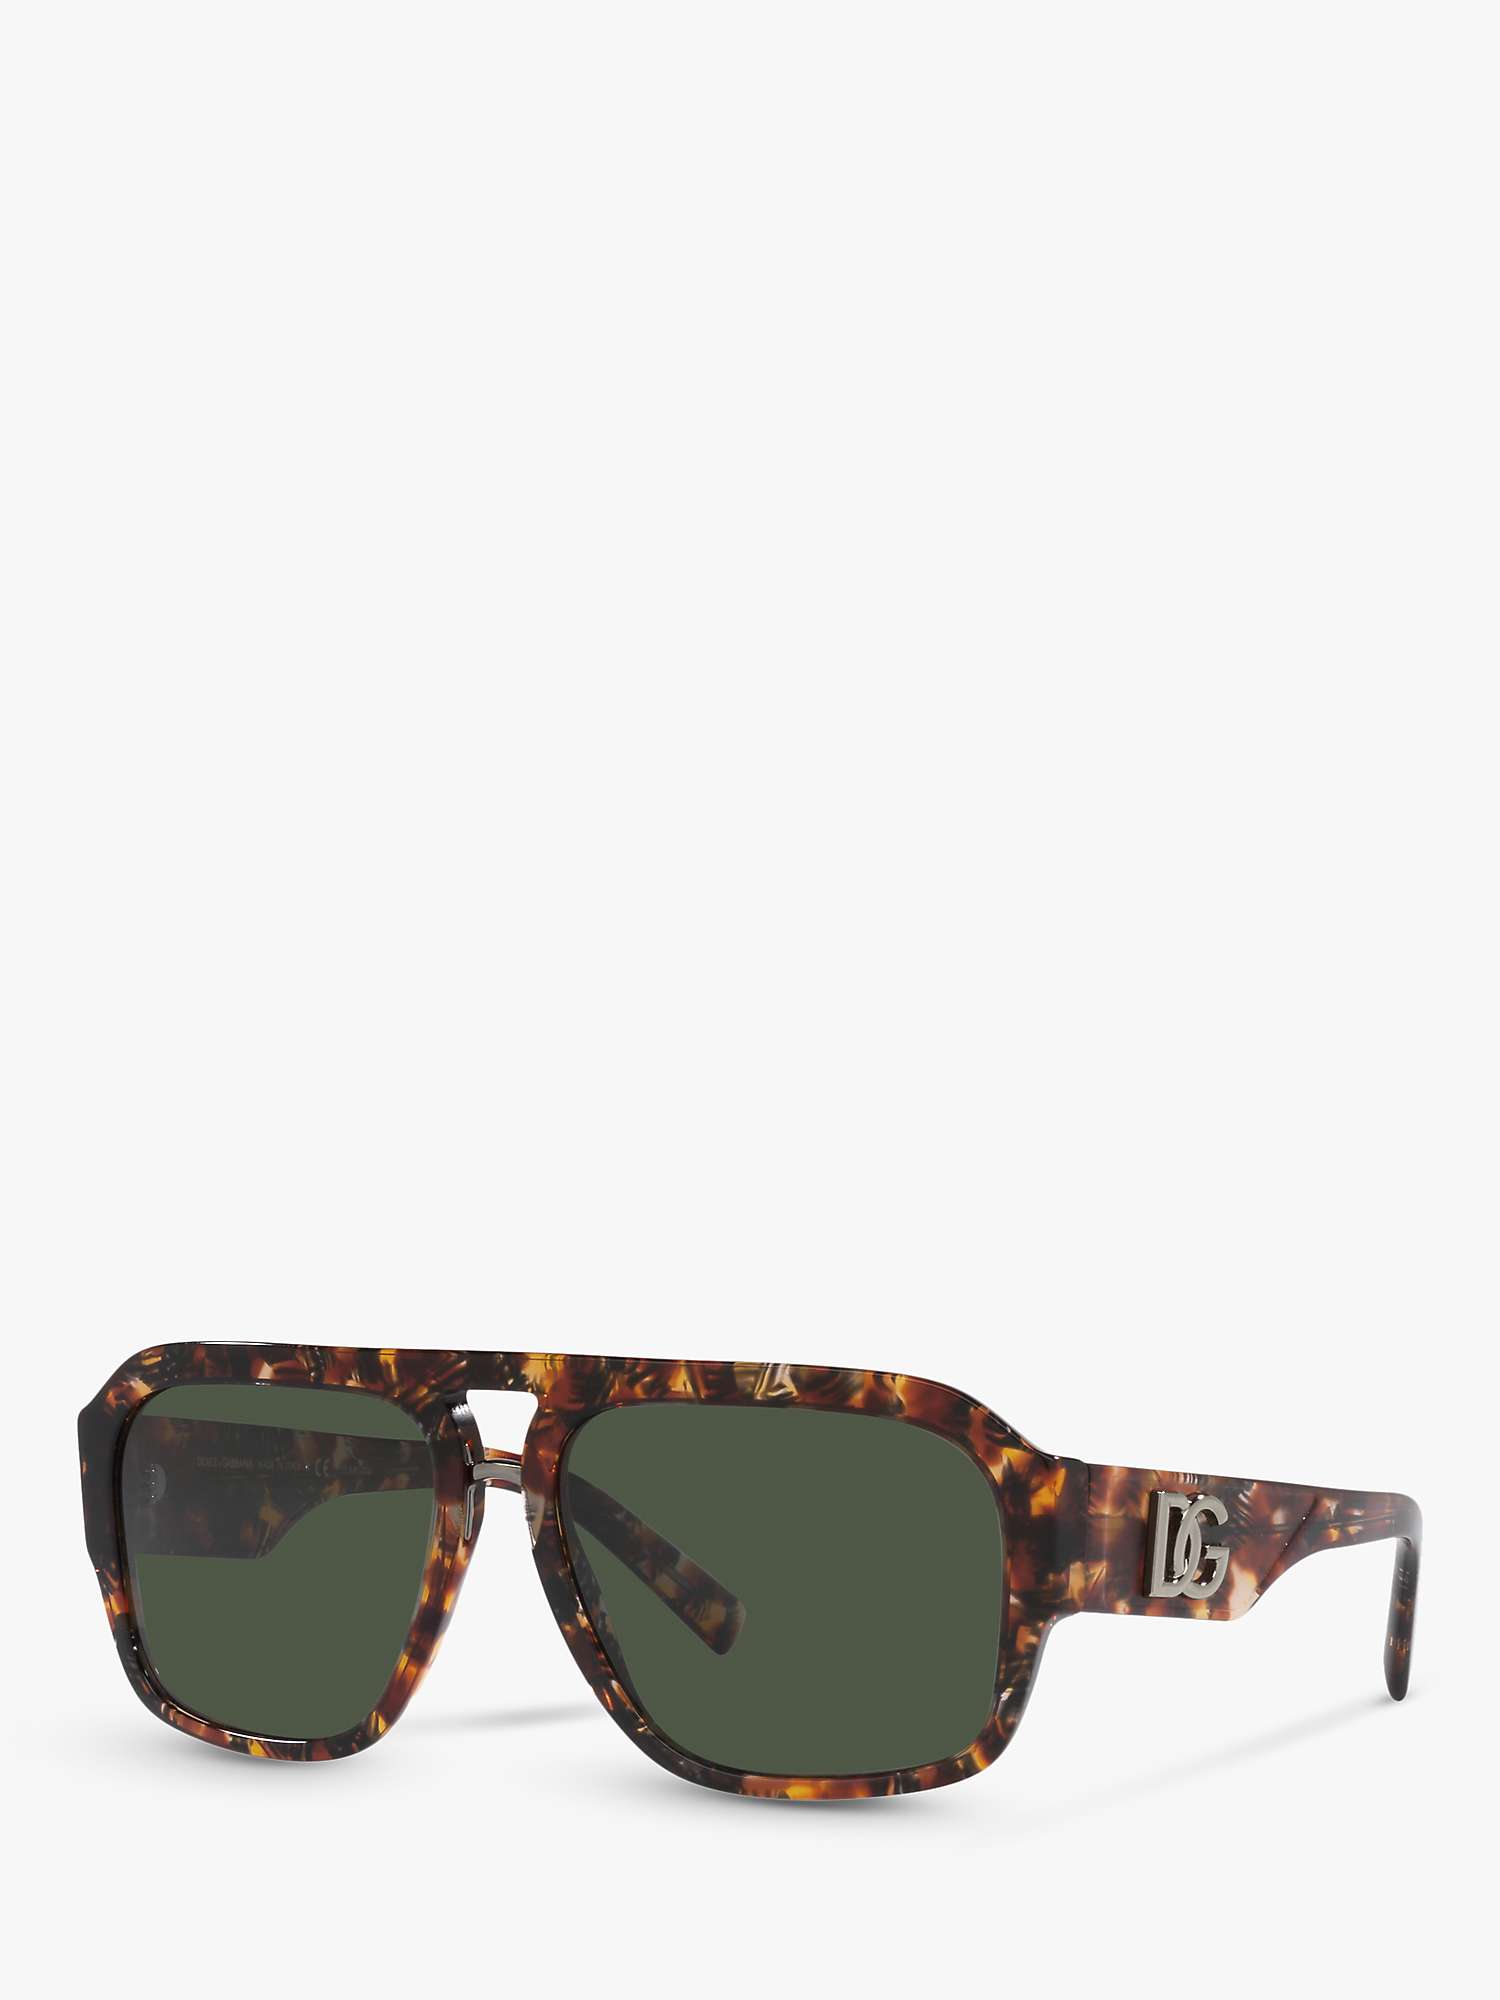 Buy Dolce & Gabbana DG4403 Men's Polarised Aviator Sunglasses, Red Havana/Grey Online at johnlewis.com